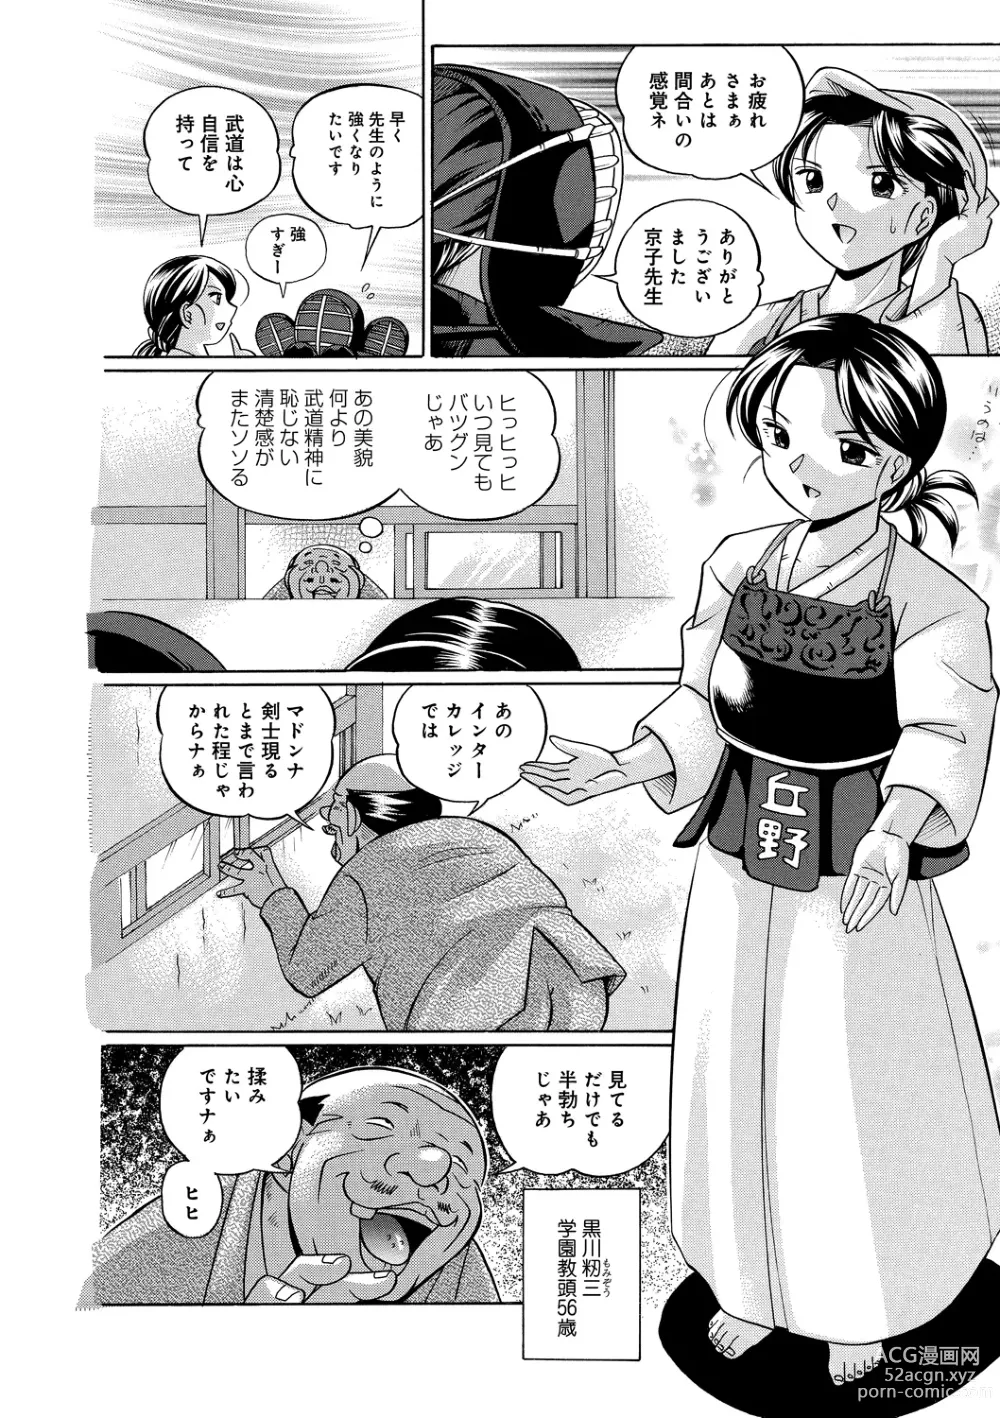 Page 4 of manga Jokyoushi Kyouko ~Kairaku Choukyoushitsu~